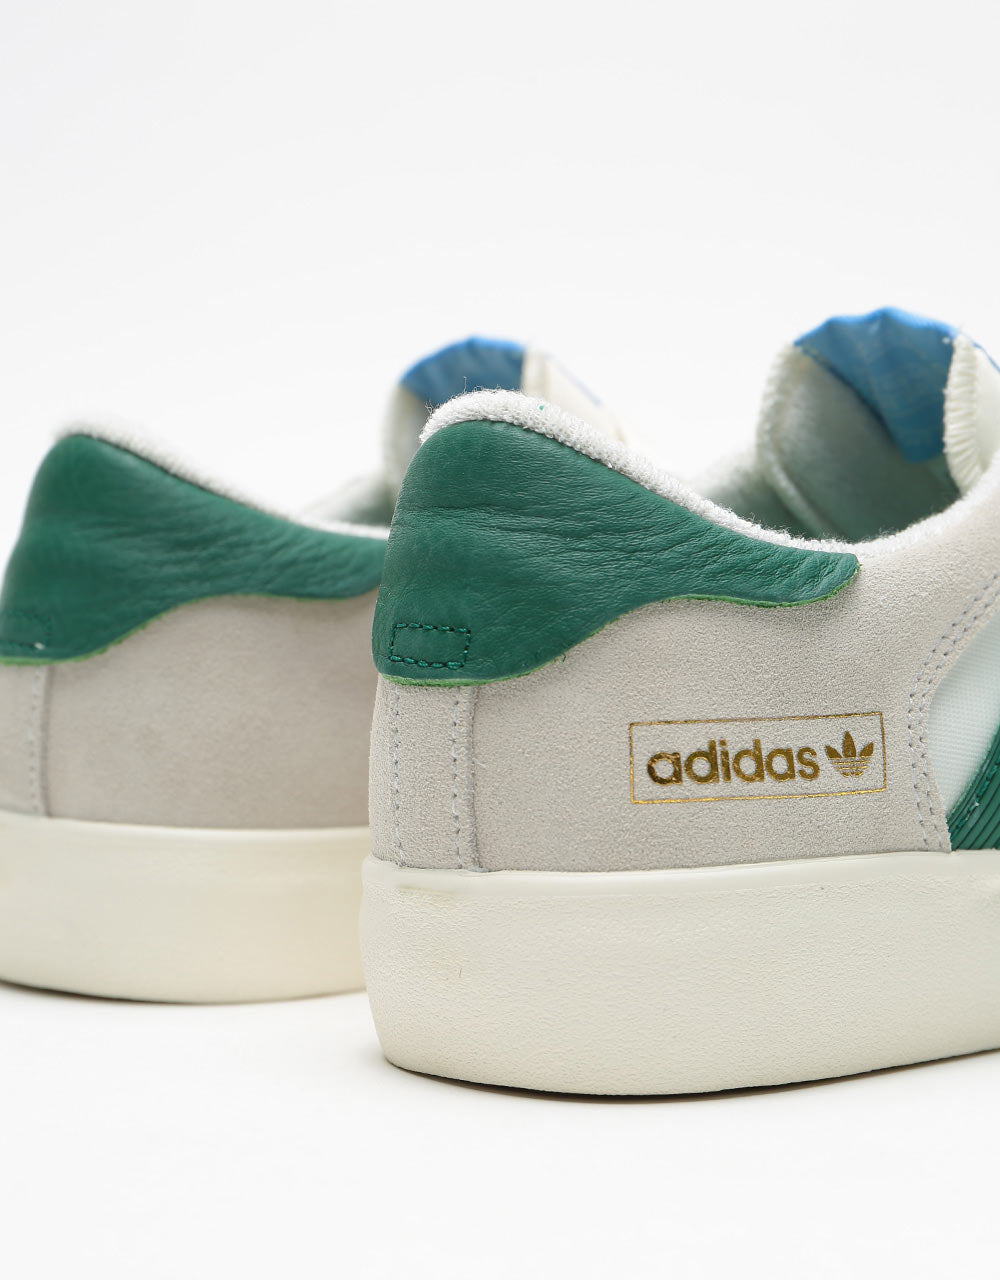 adidas Matchbreak Super Skate Shoes - Crystal White/Collegiate Green/C